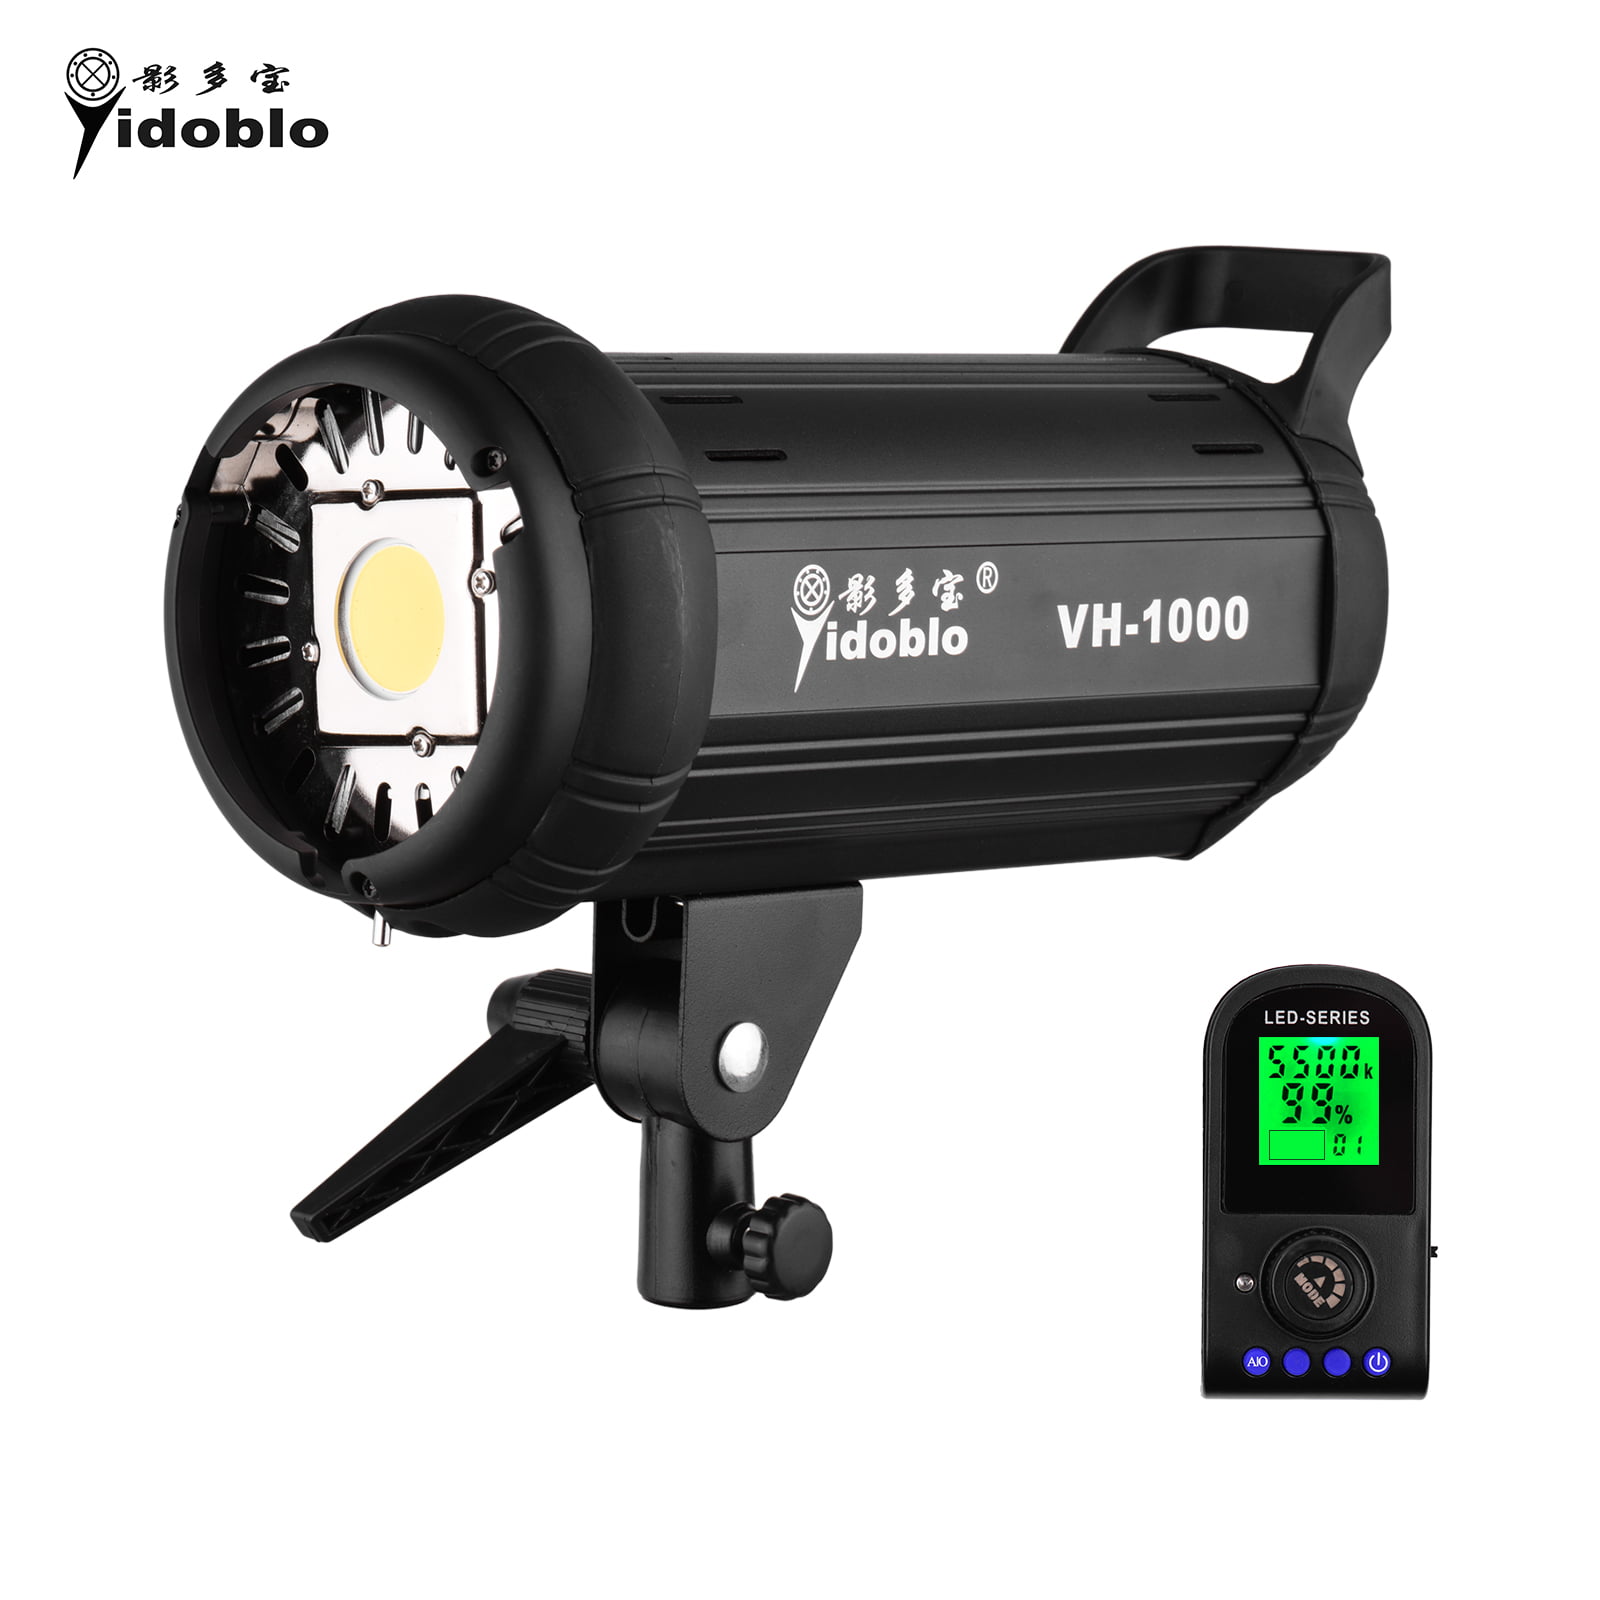 LED 100W Photo Studio Video Light CRI 95 10000 Lumens w/ Dimmer Umbrella Holder 